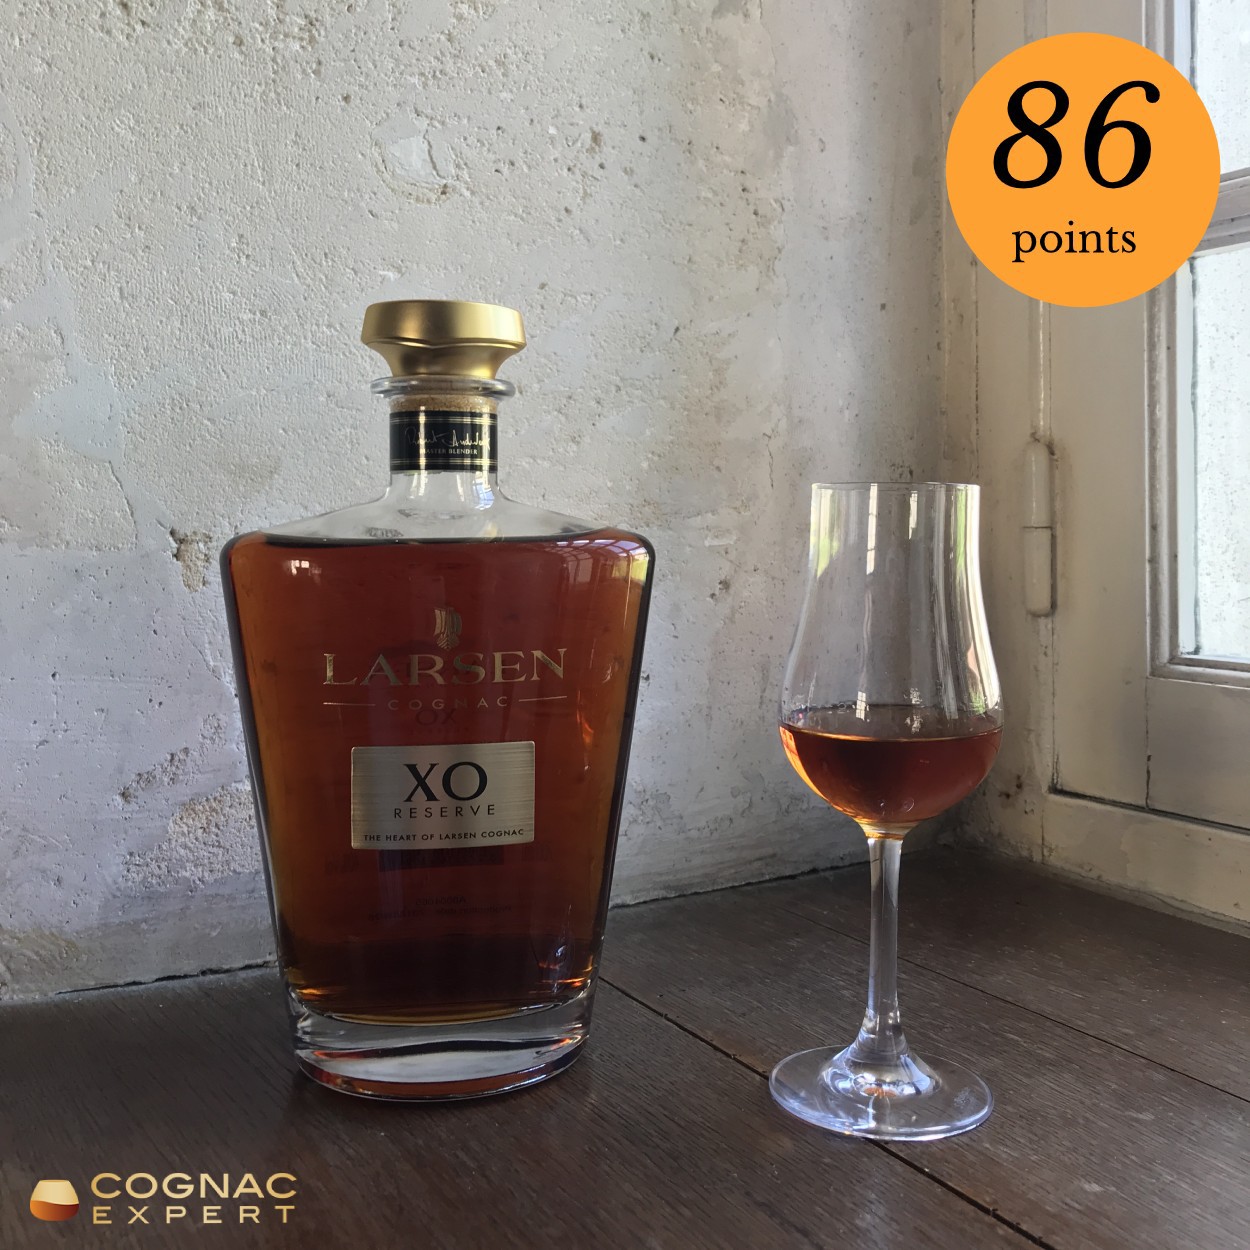 Larsen XO Cognac bottle and glass